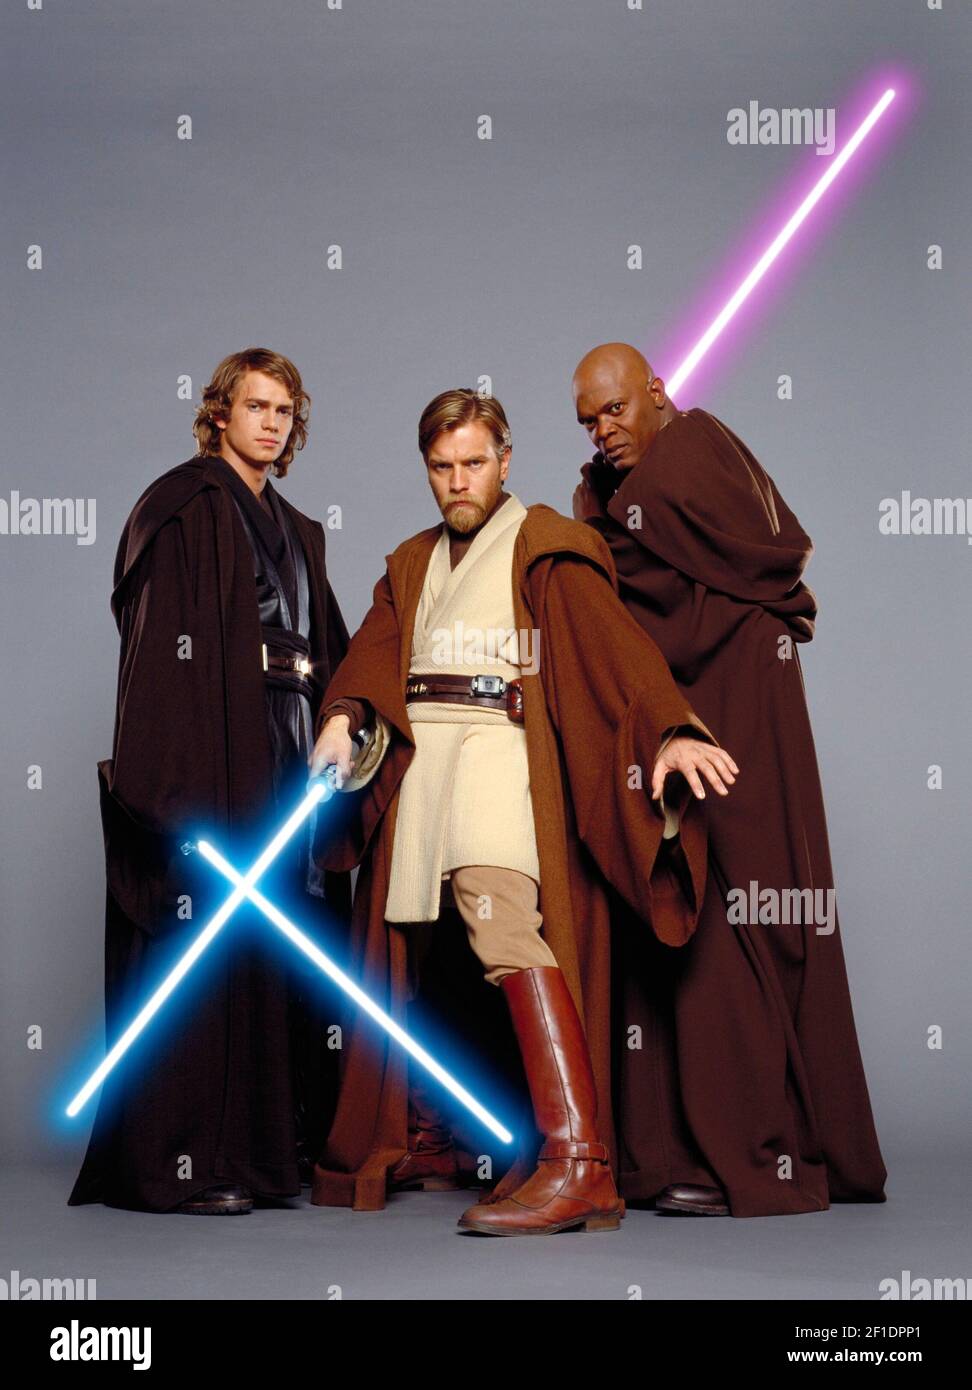 Star Wars: Episode III Revenge of the Sith" (2005) Anakin Skywalker (Hayden  Christensen), Obi-Wan Kenobi (Ewan McGregor) and Mace Windu (Samuel L.  Jackson) (Photo Credit: 20th Century Fox/Shooting Star) *** Please Use